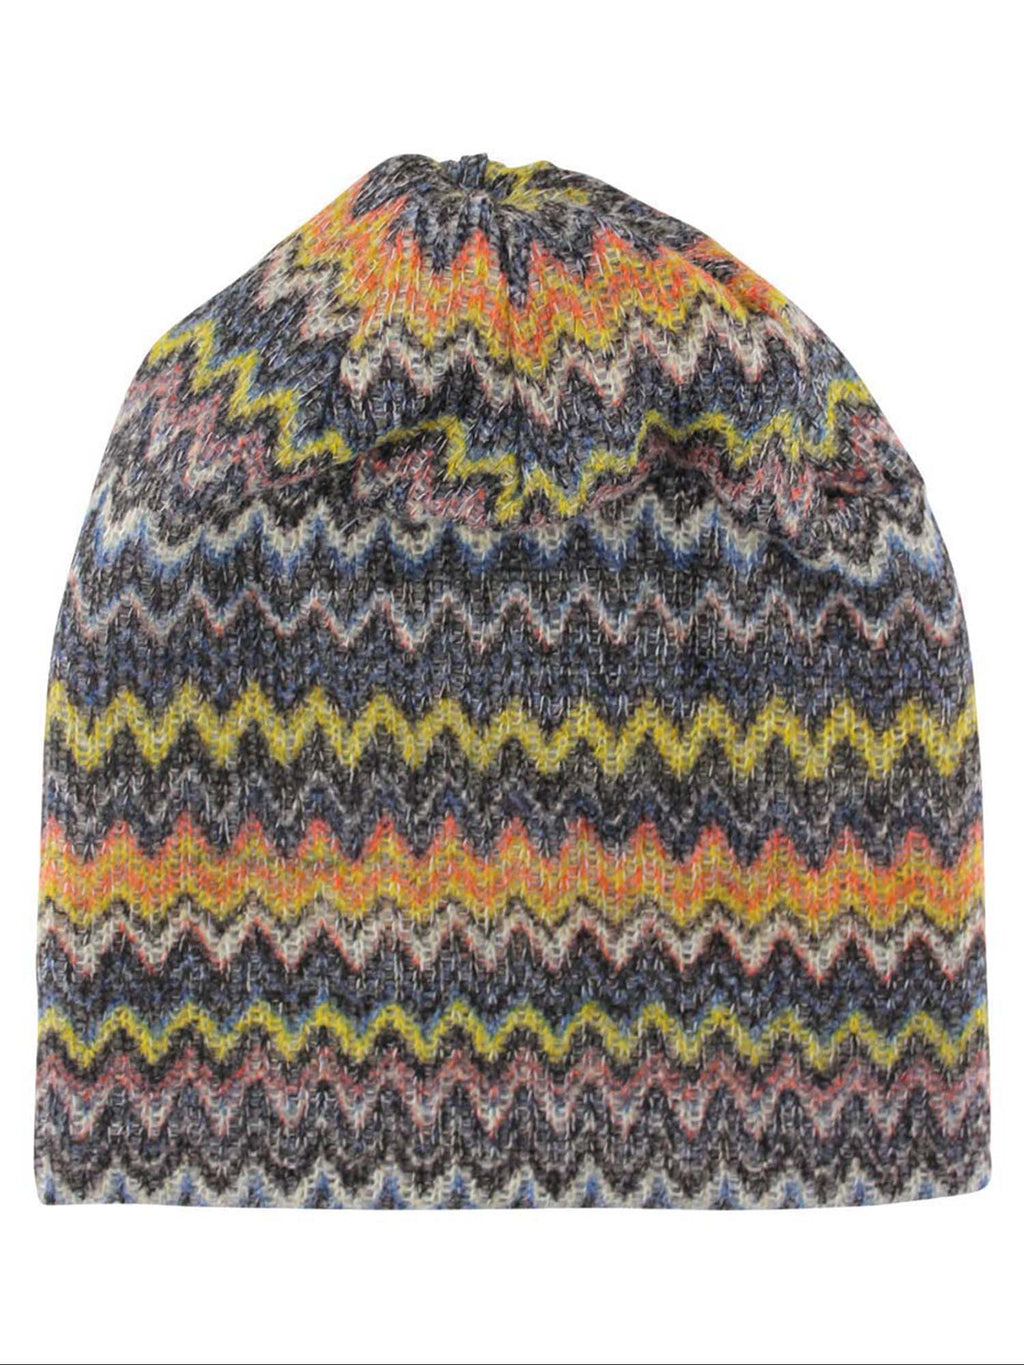 Chevron Stripe Slouchy Knit Beanie Cap Hat